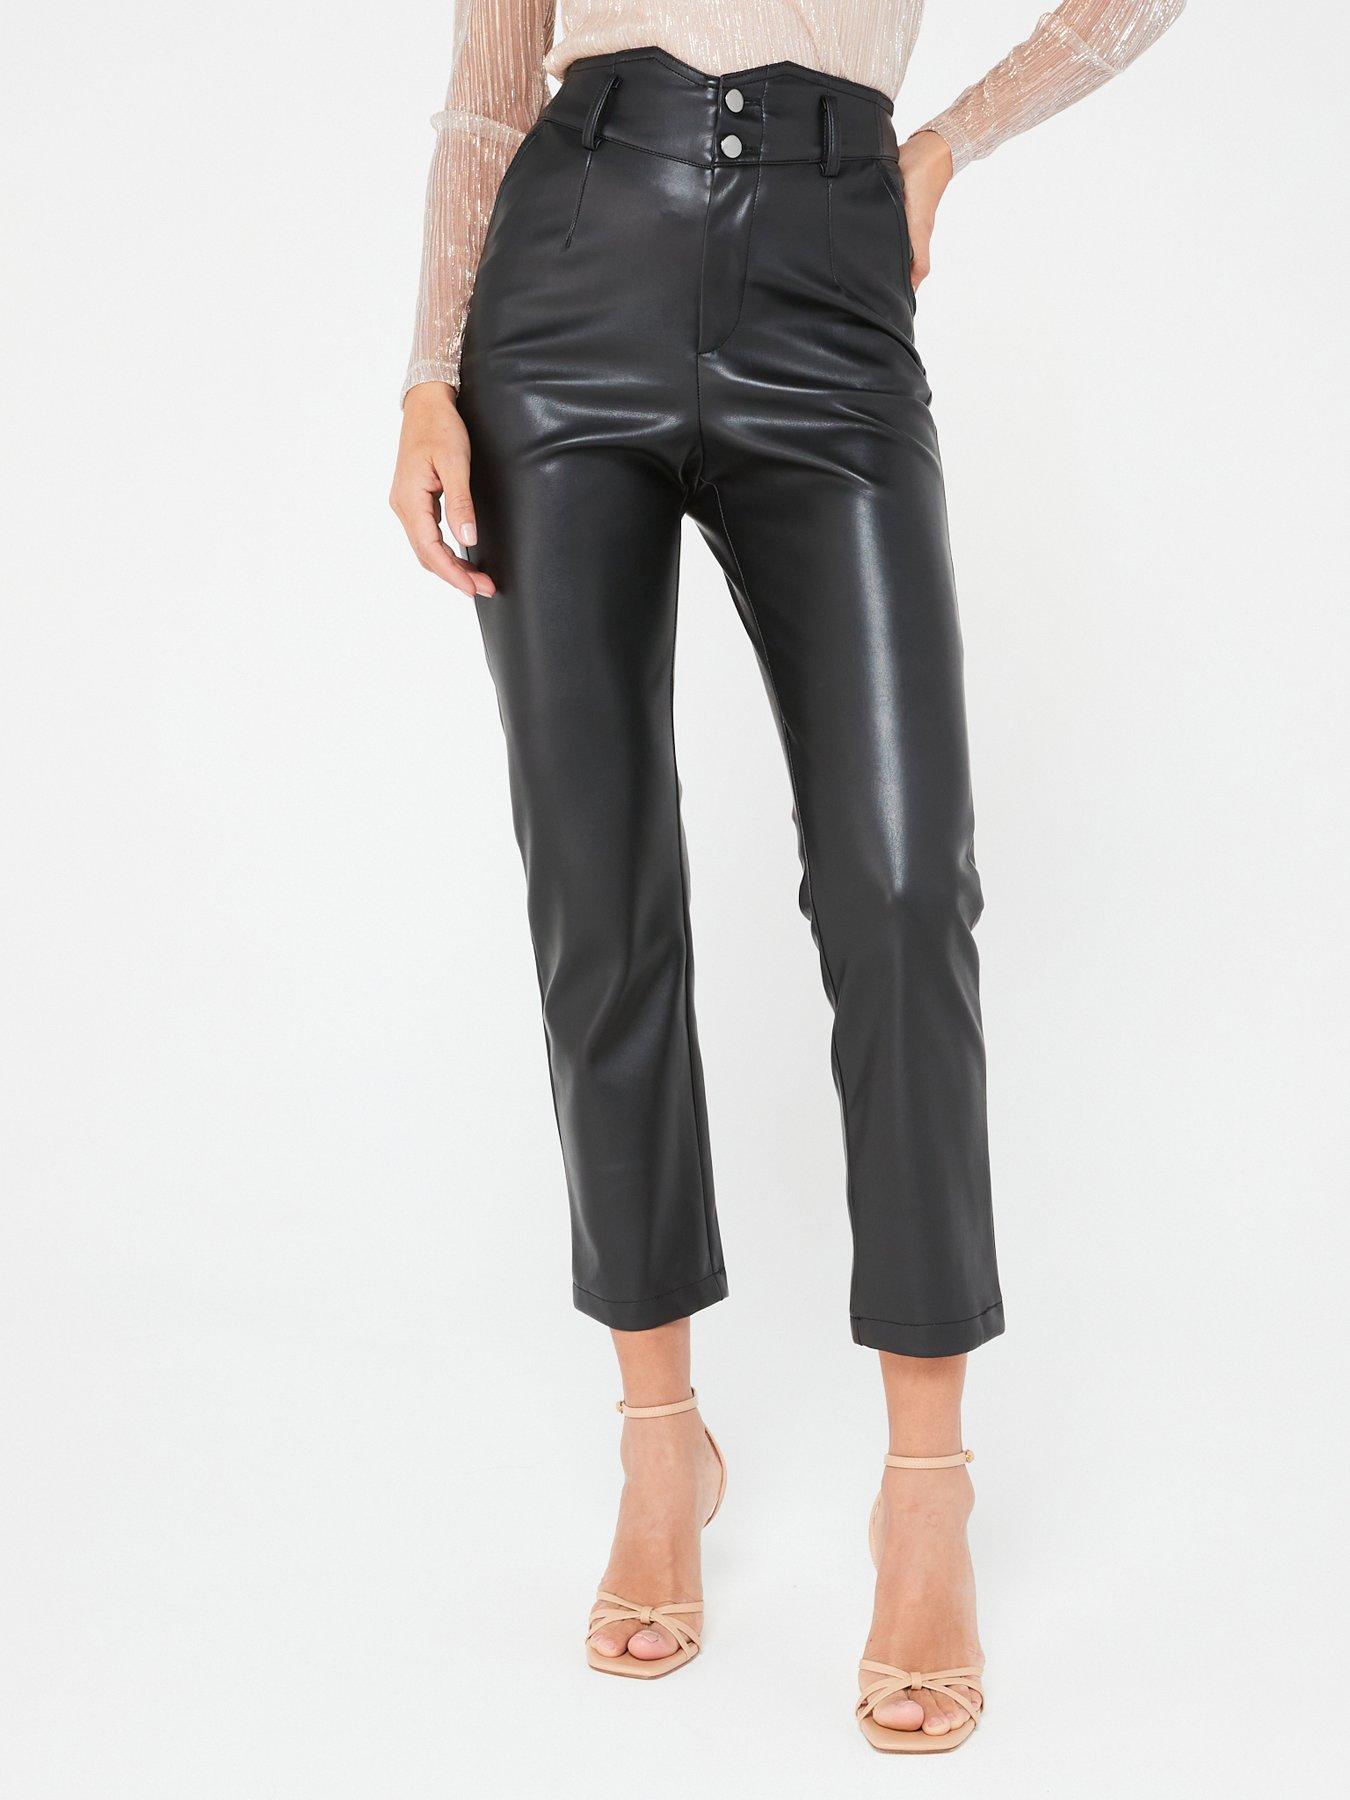 Leather-effect skinny trousers - Woman | Mango Ireland